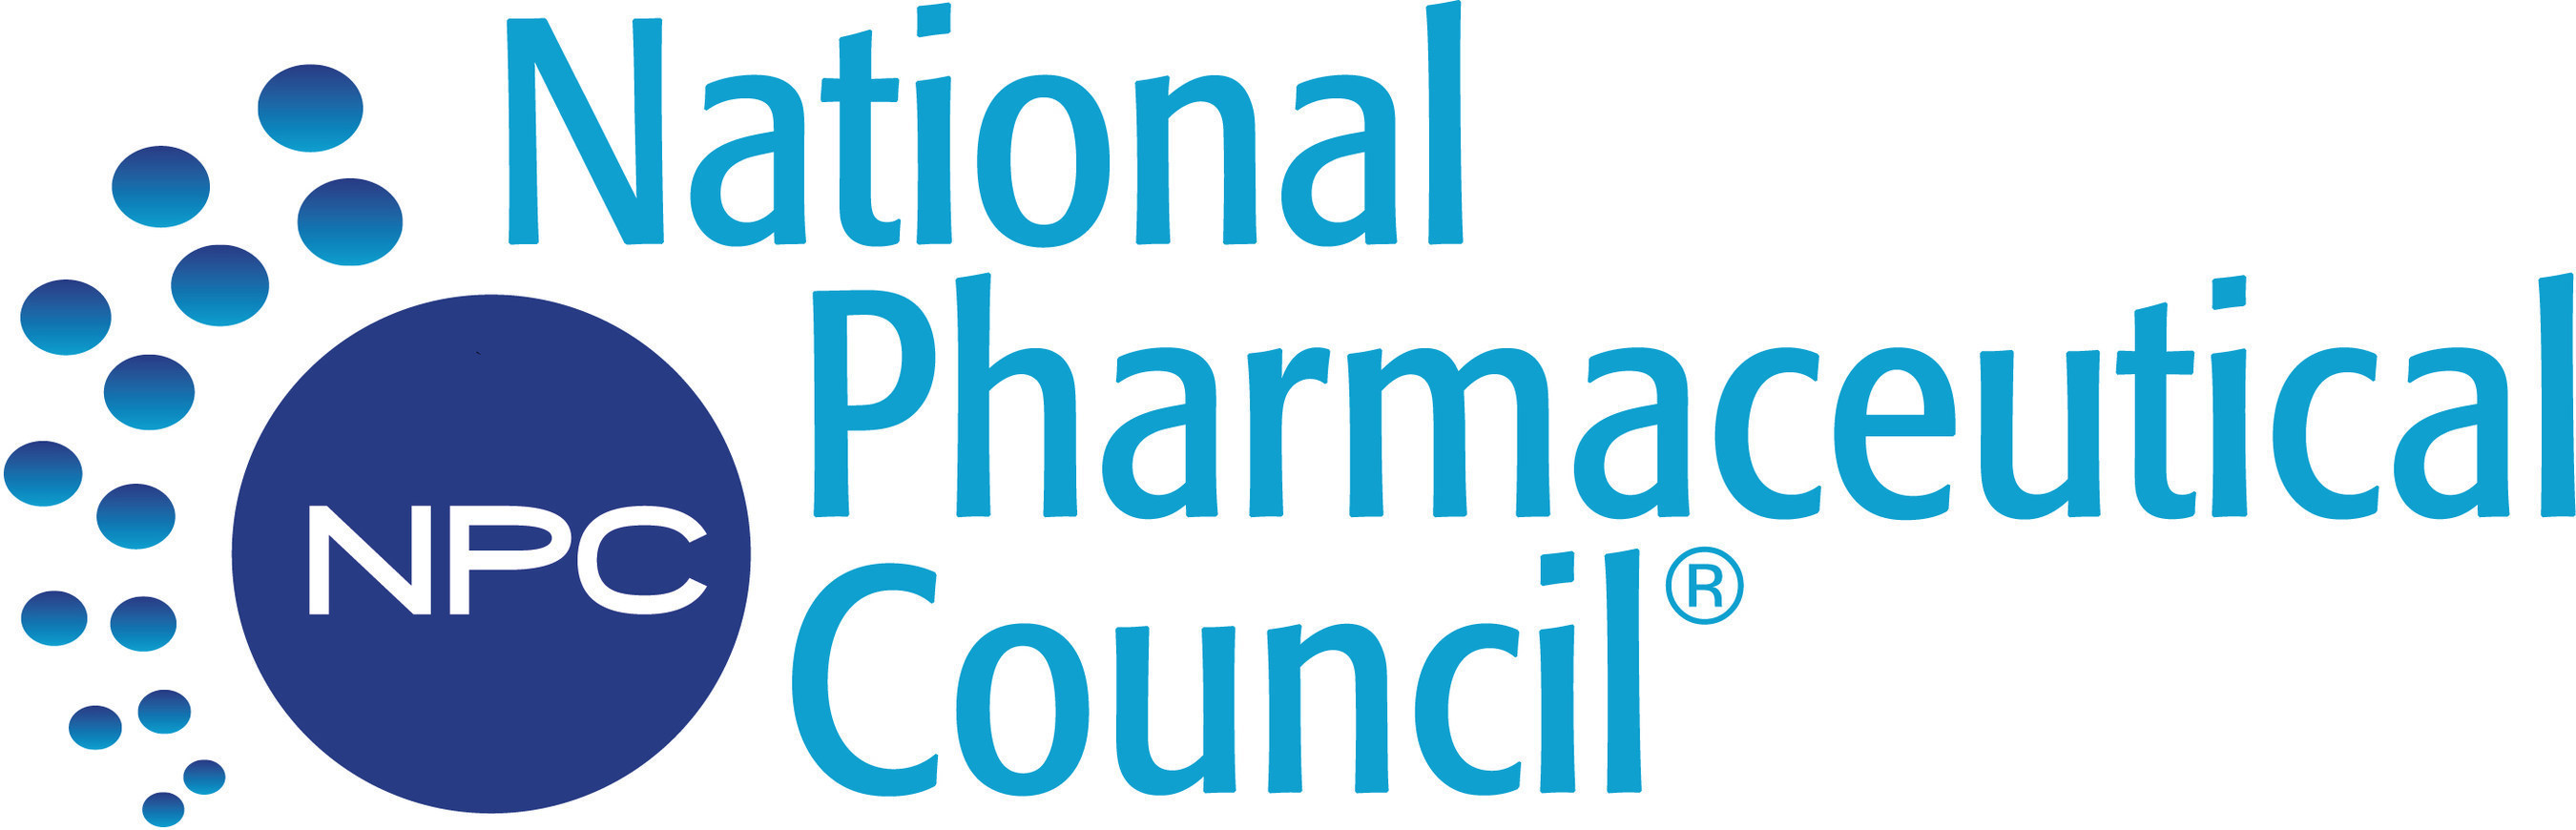 National Pharmaceutical Council Logo (PRNewsFoto/National Pharmaceutical Council)